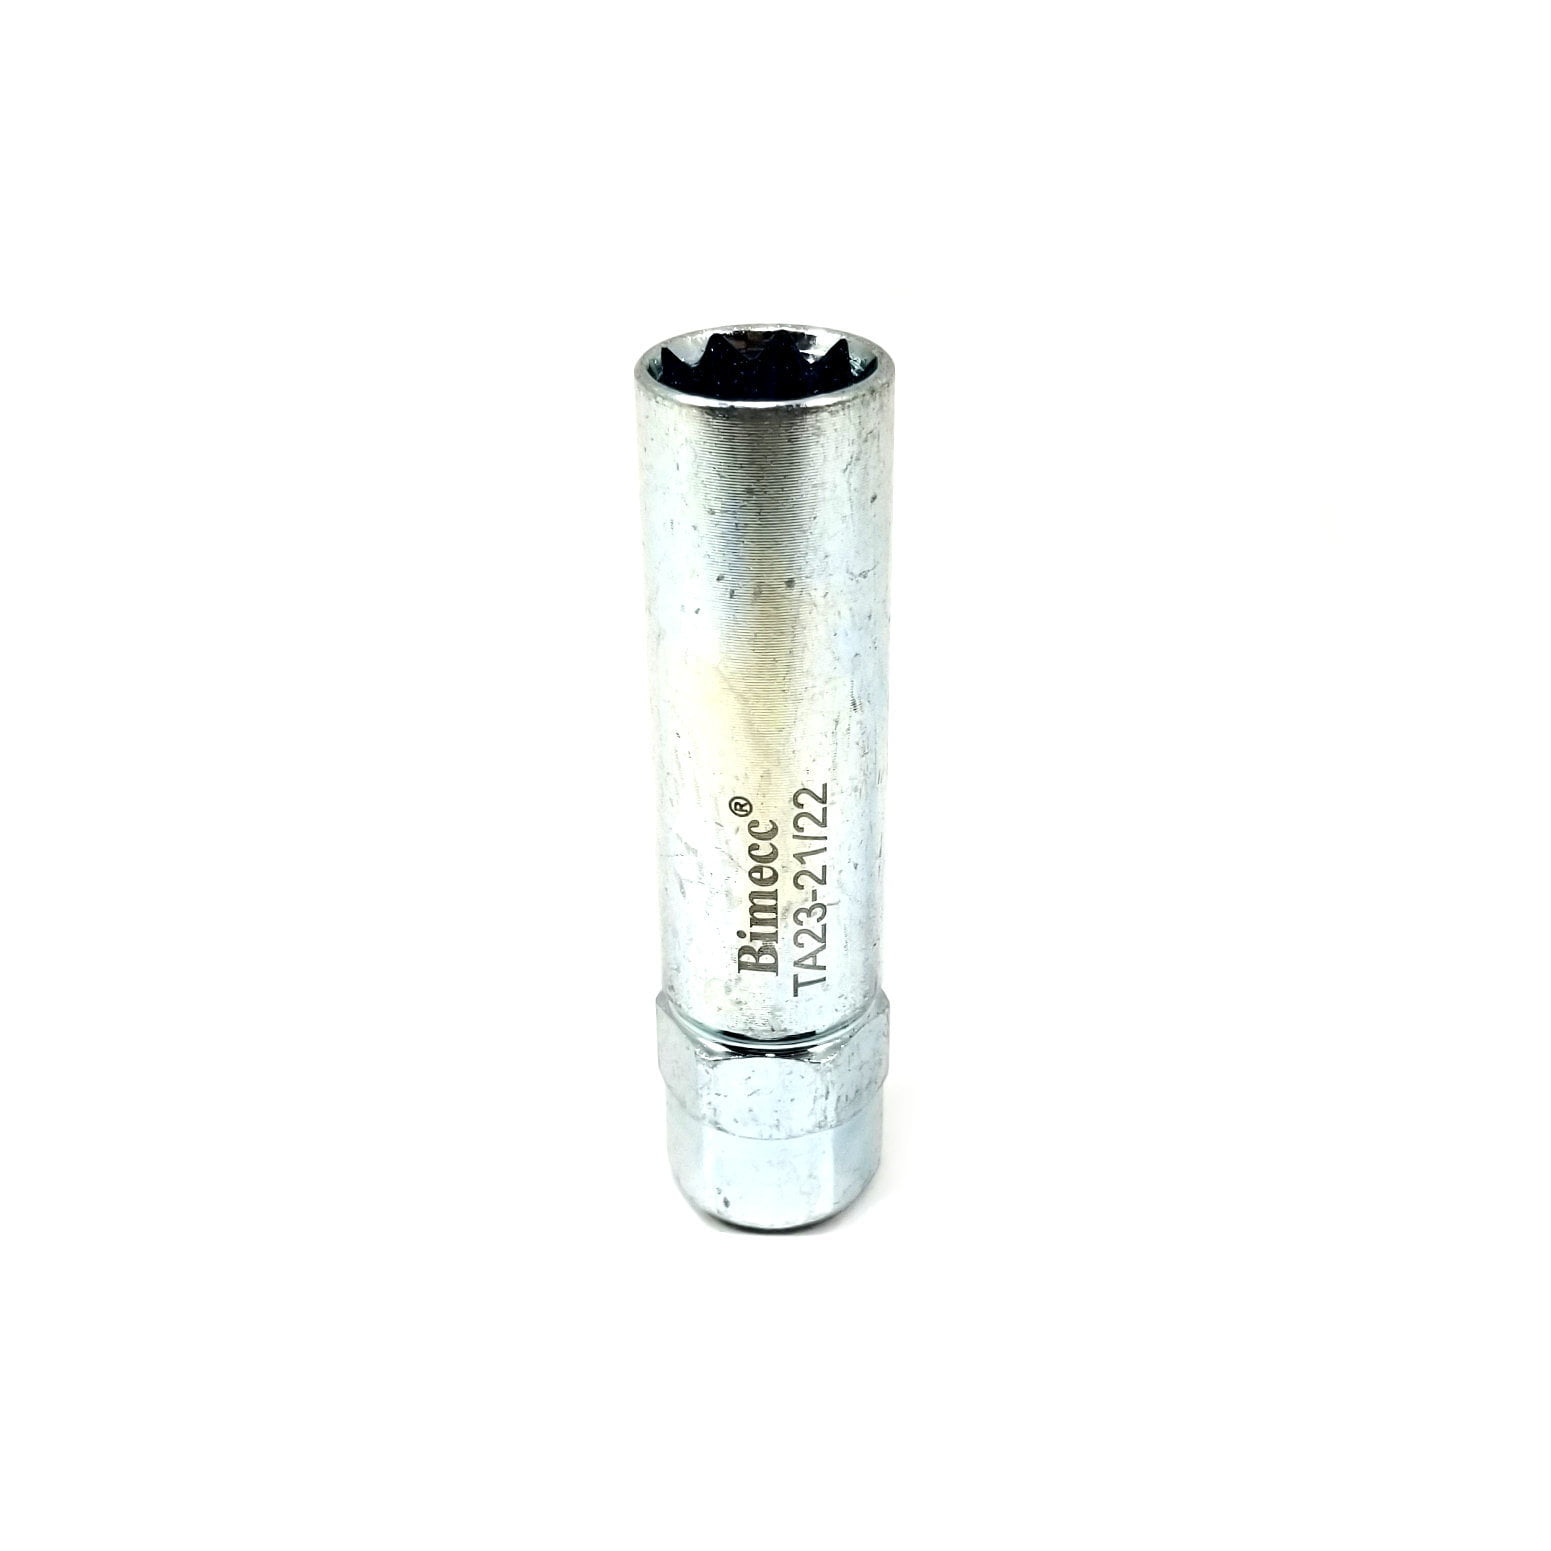 1 3/4" and 13/16" 6 Spline Key Tool for Spline Tuner Lug Nuts Hex 21mm One 